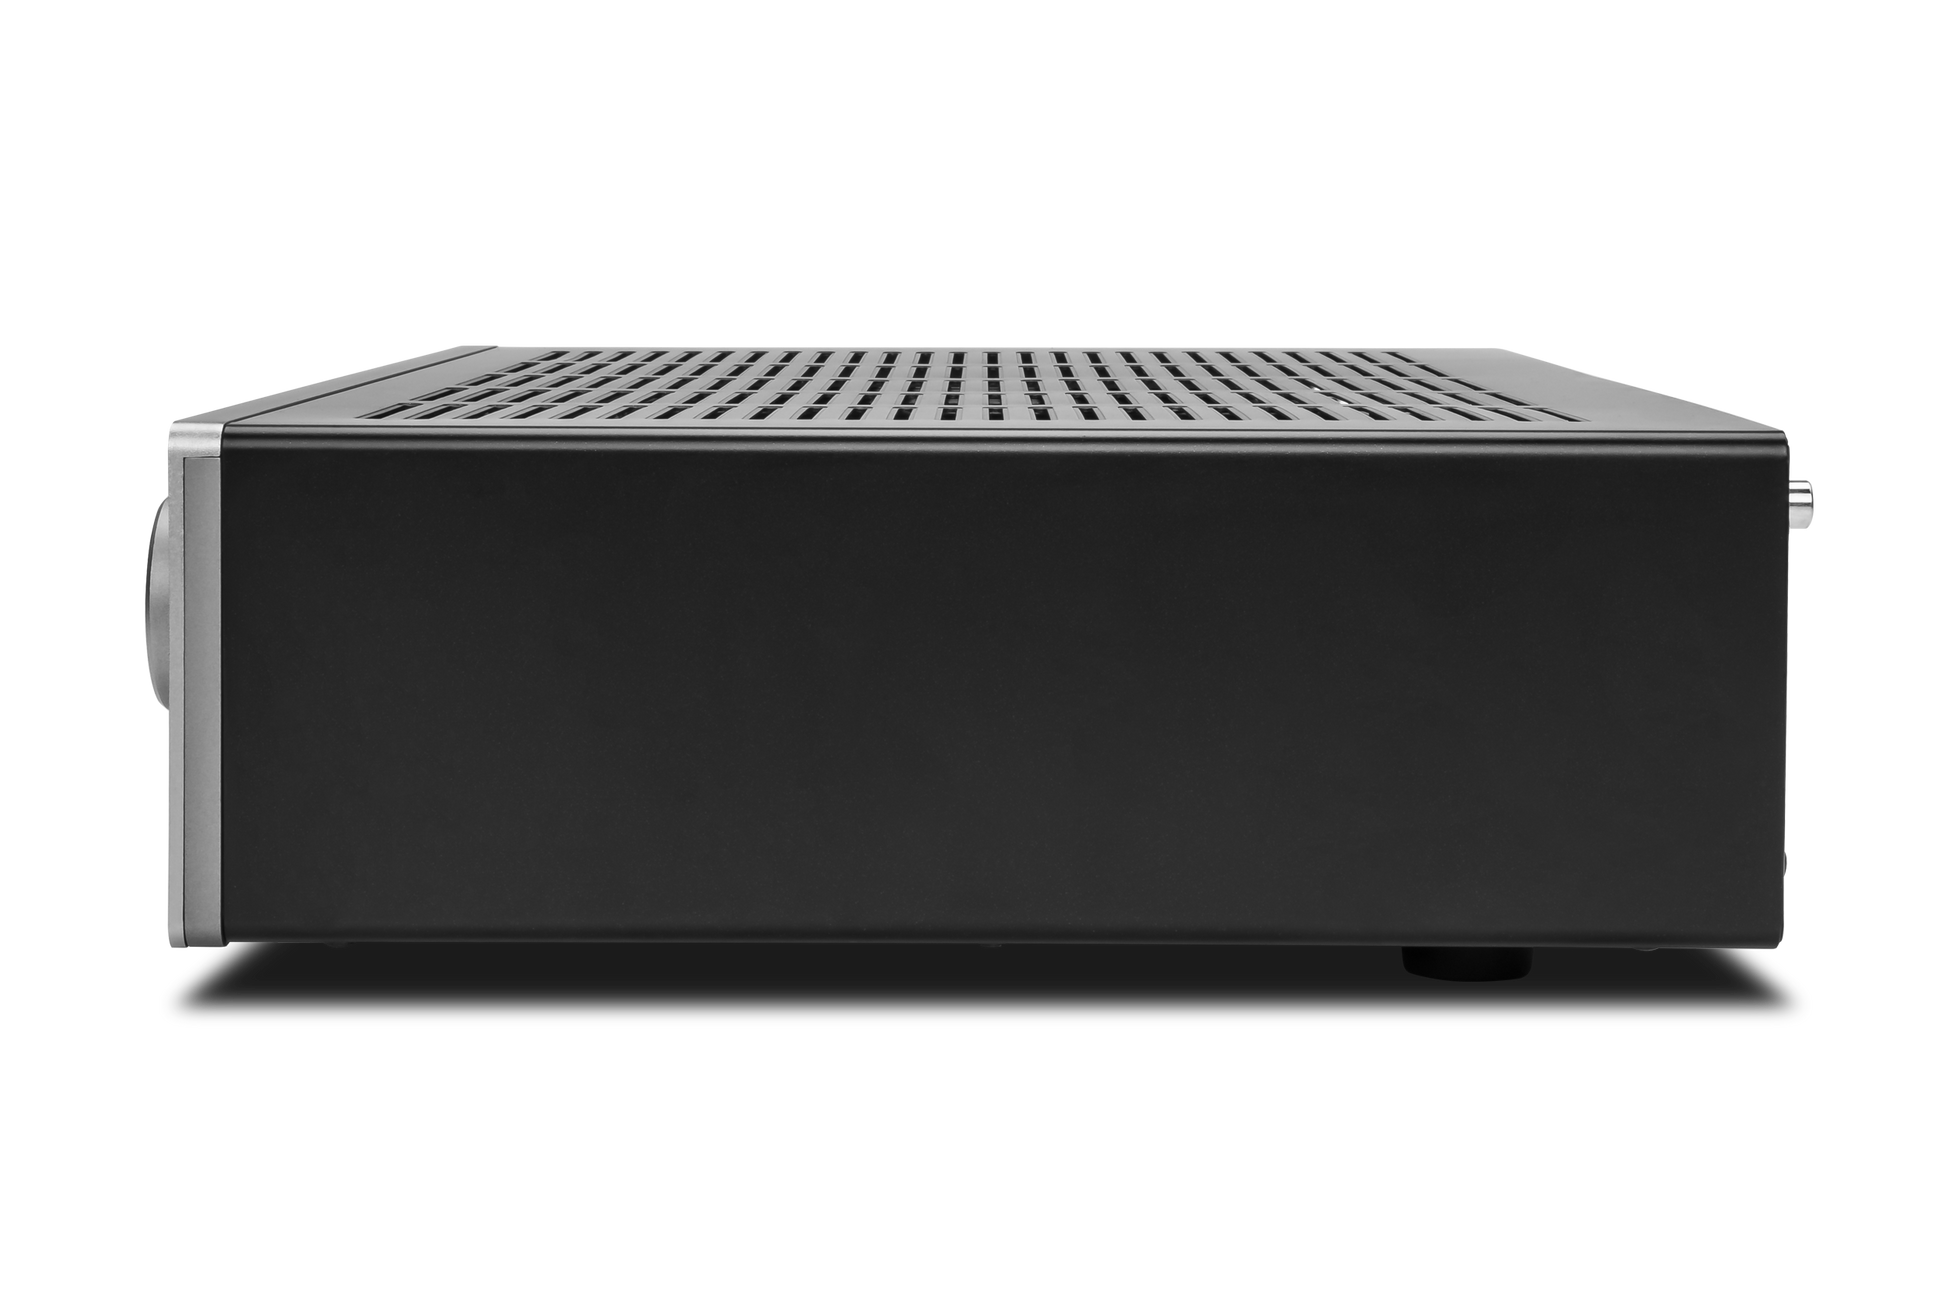 AXR85-integrated amplifier-Cambridge Audio-PremiumHIFI